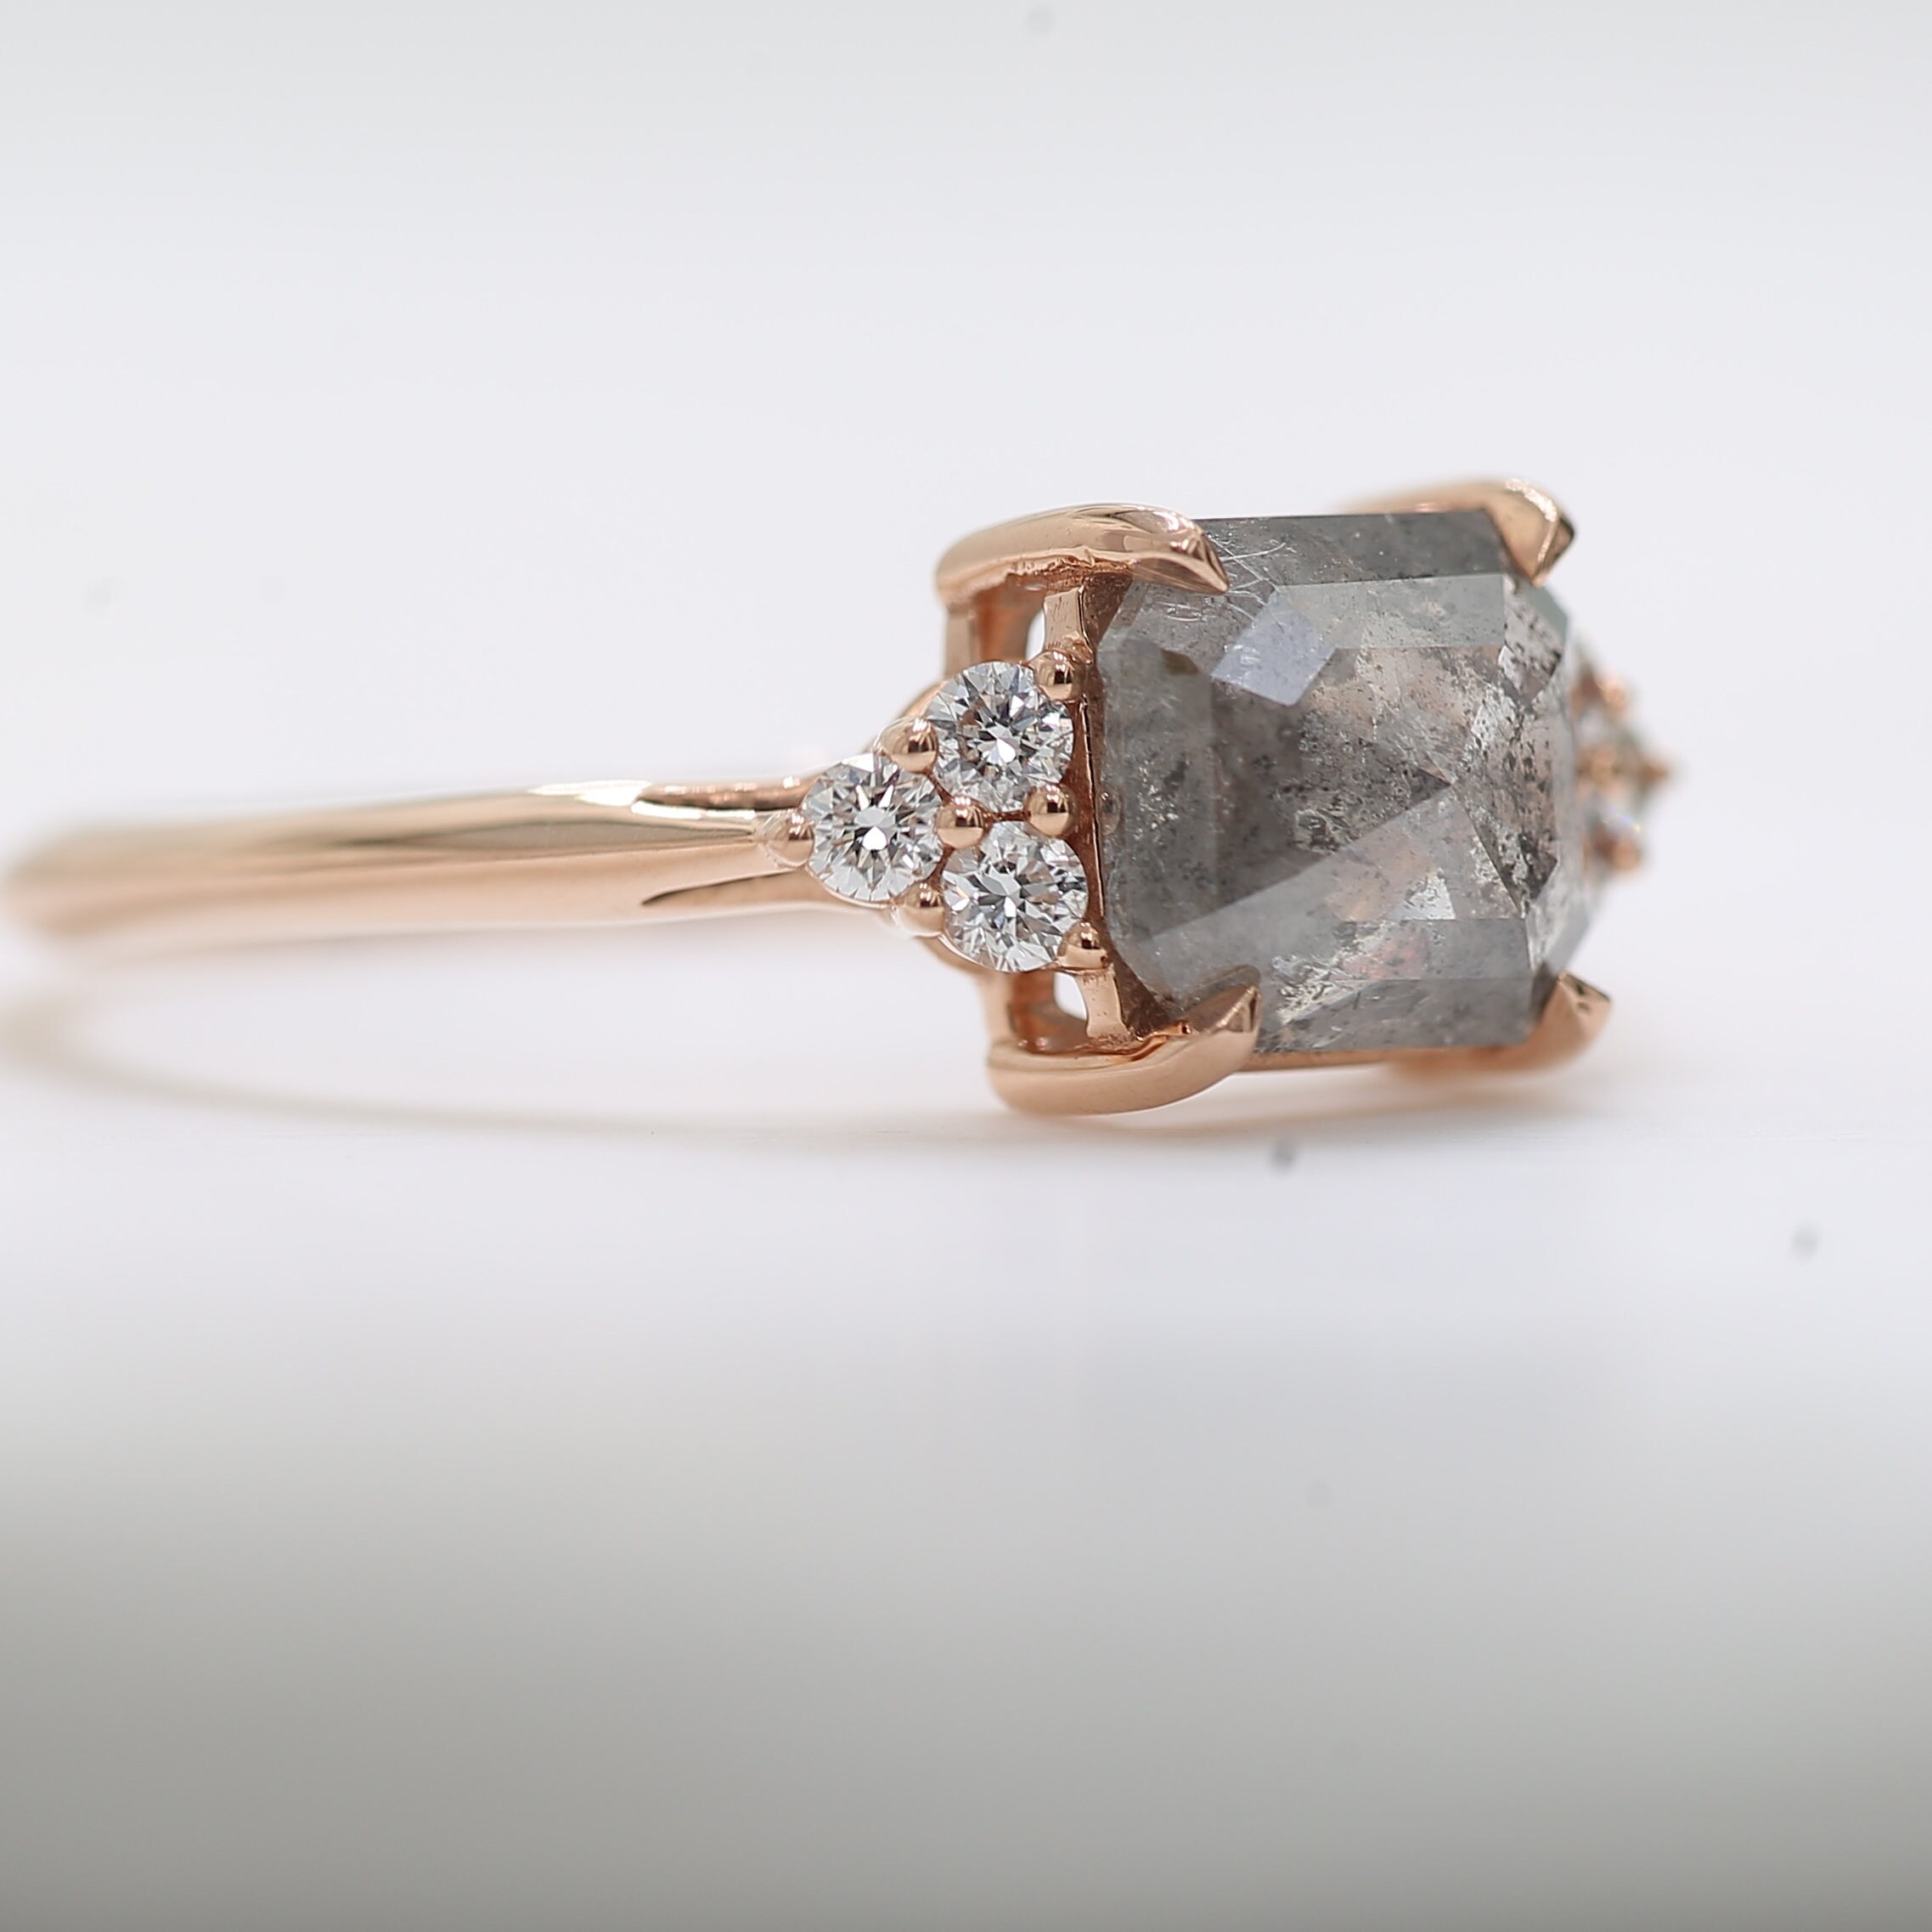 Salt And Pepper Asscher Diamond 14K Solid Gold Ring Engagement | Etsy